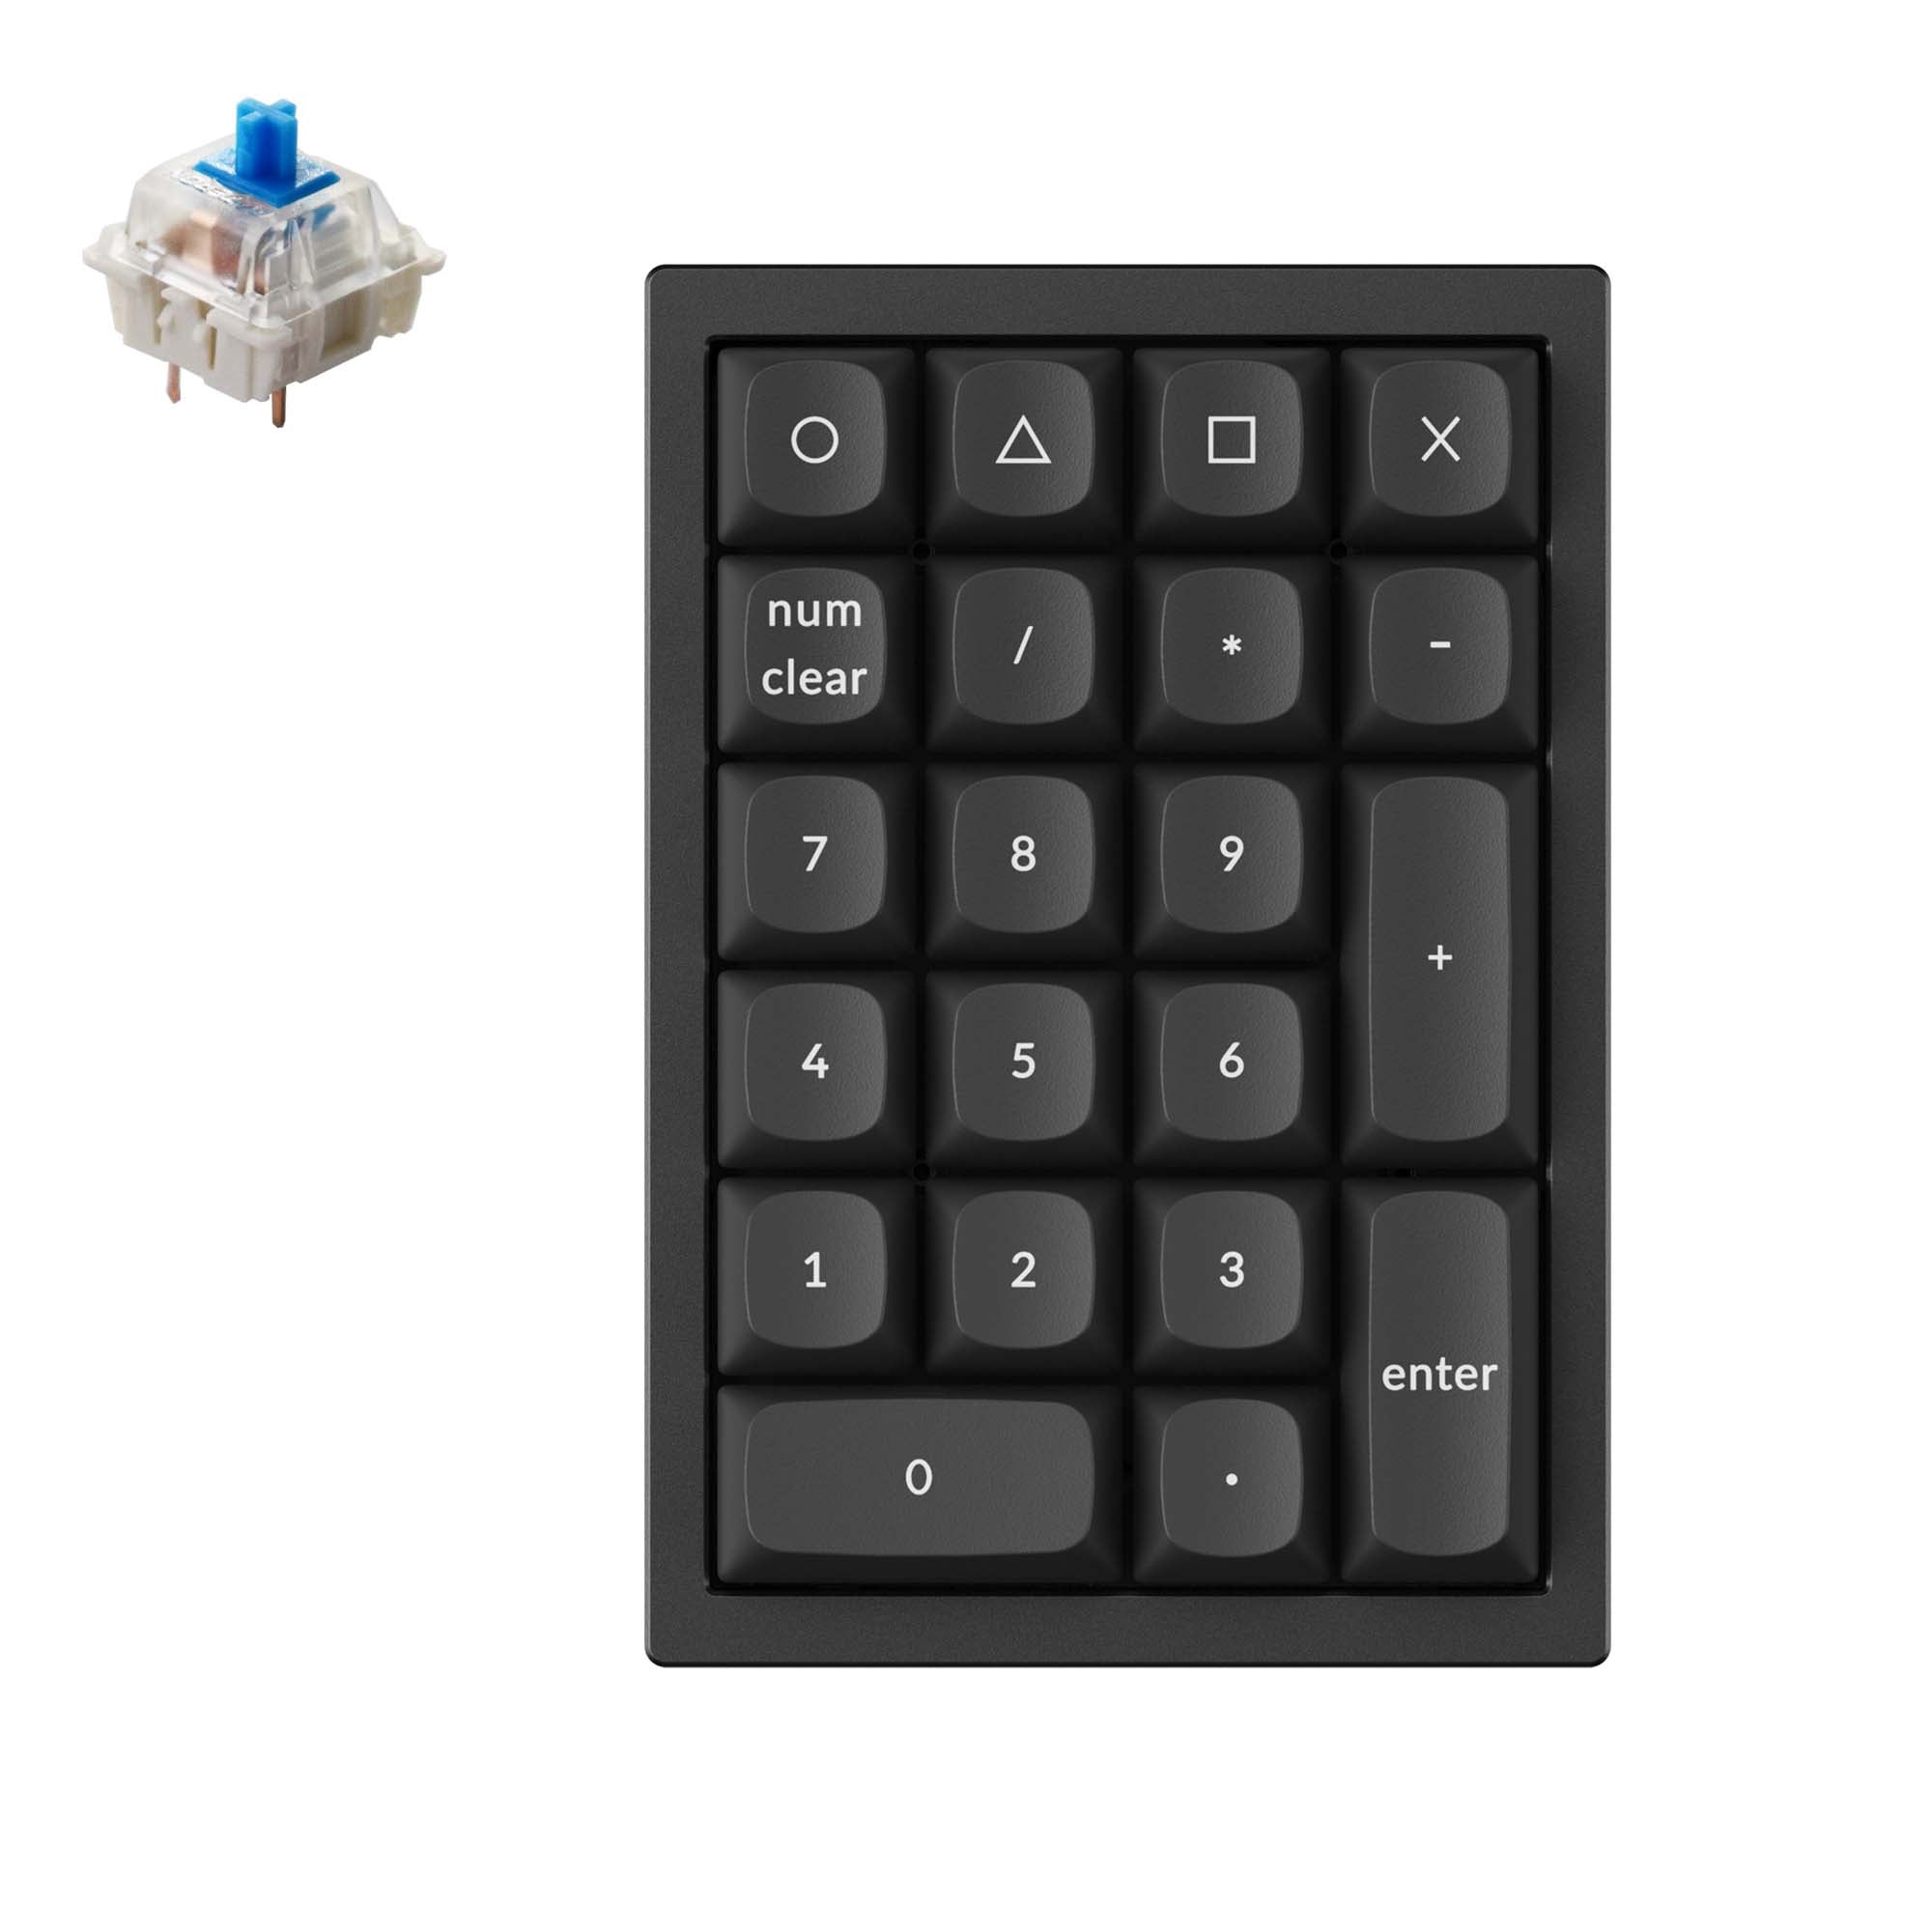    Keychron-Q0-custom-number-pad-black-blue